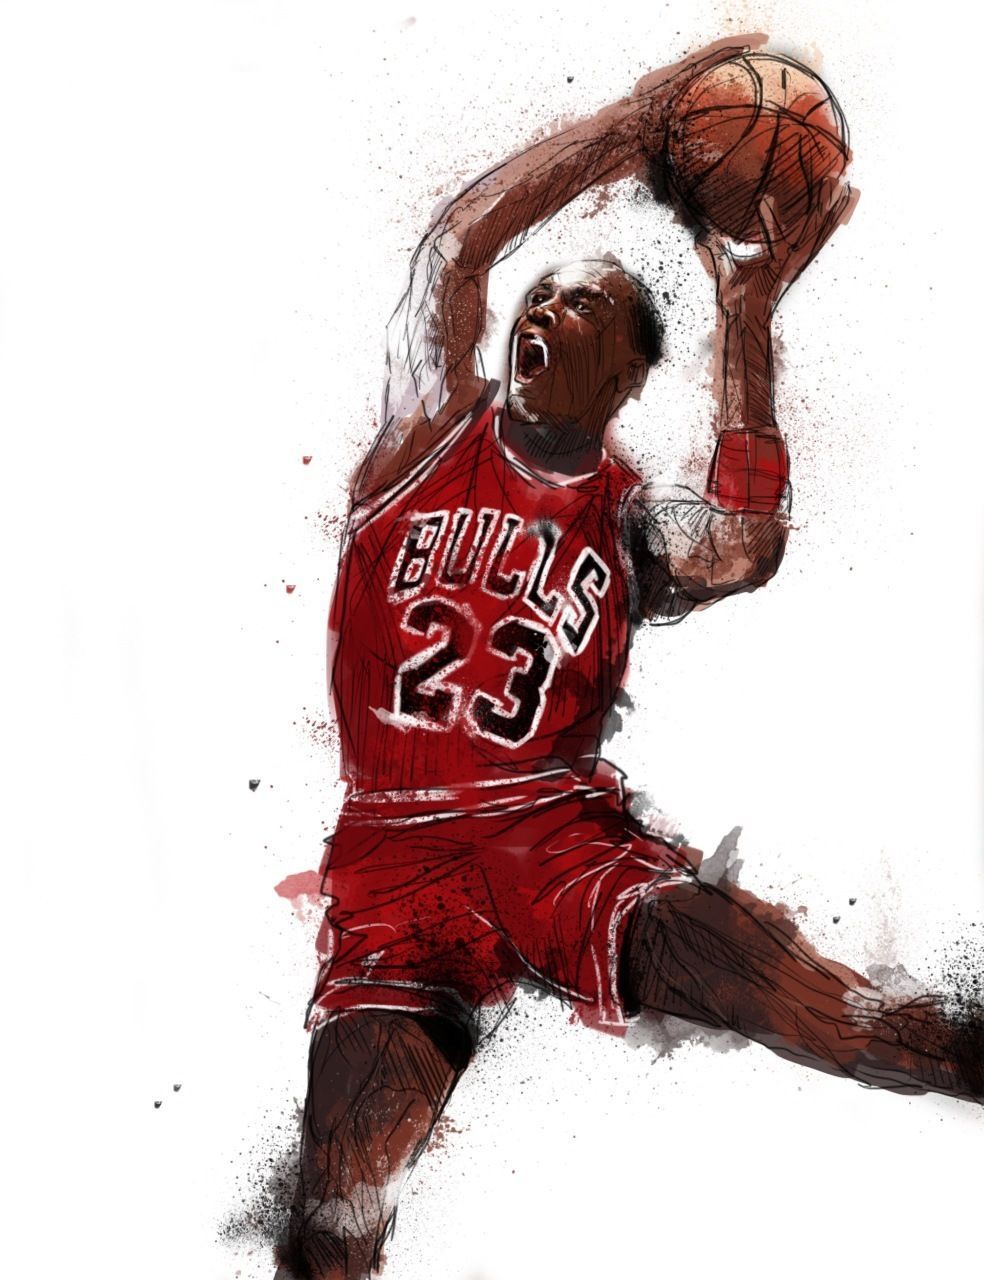 Michael Jordan Art. Michael jordan art, Michael jordan basketball, Michael jordon